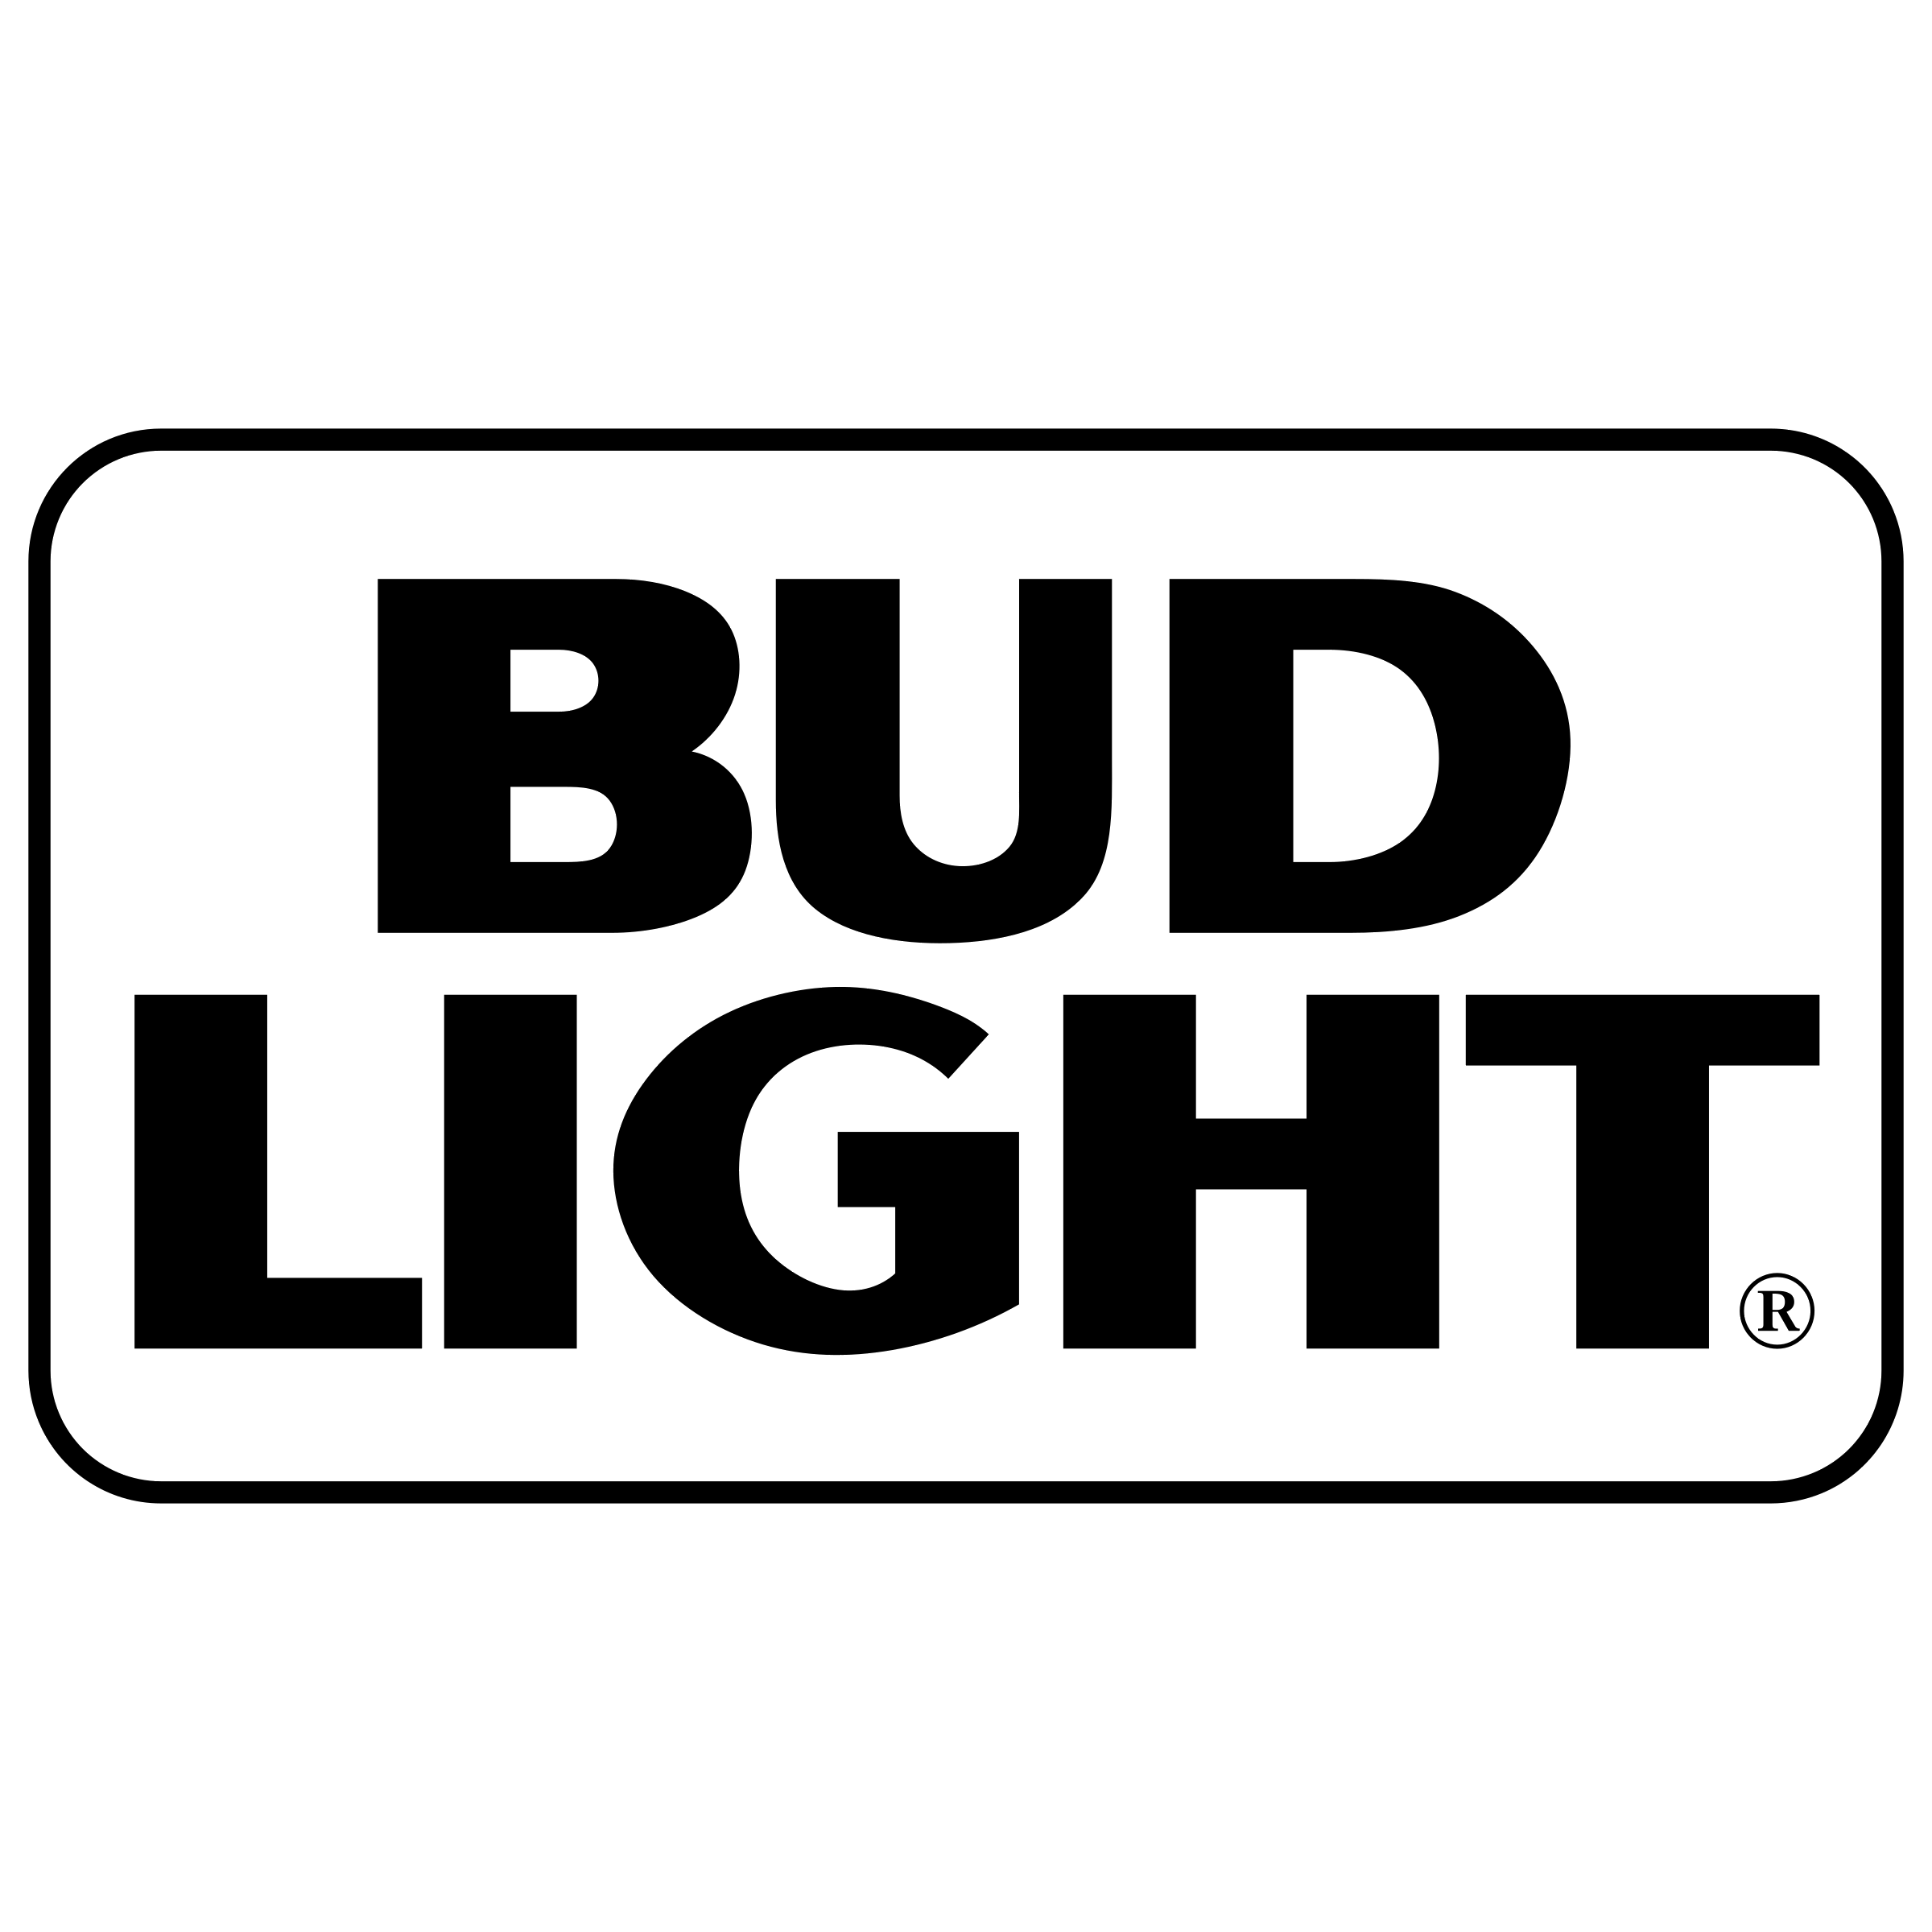 bud-light-logo-black-and-white.png